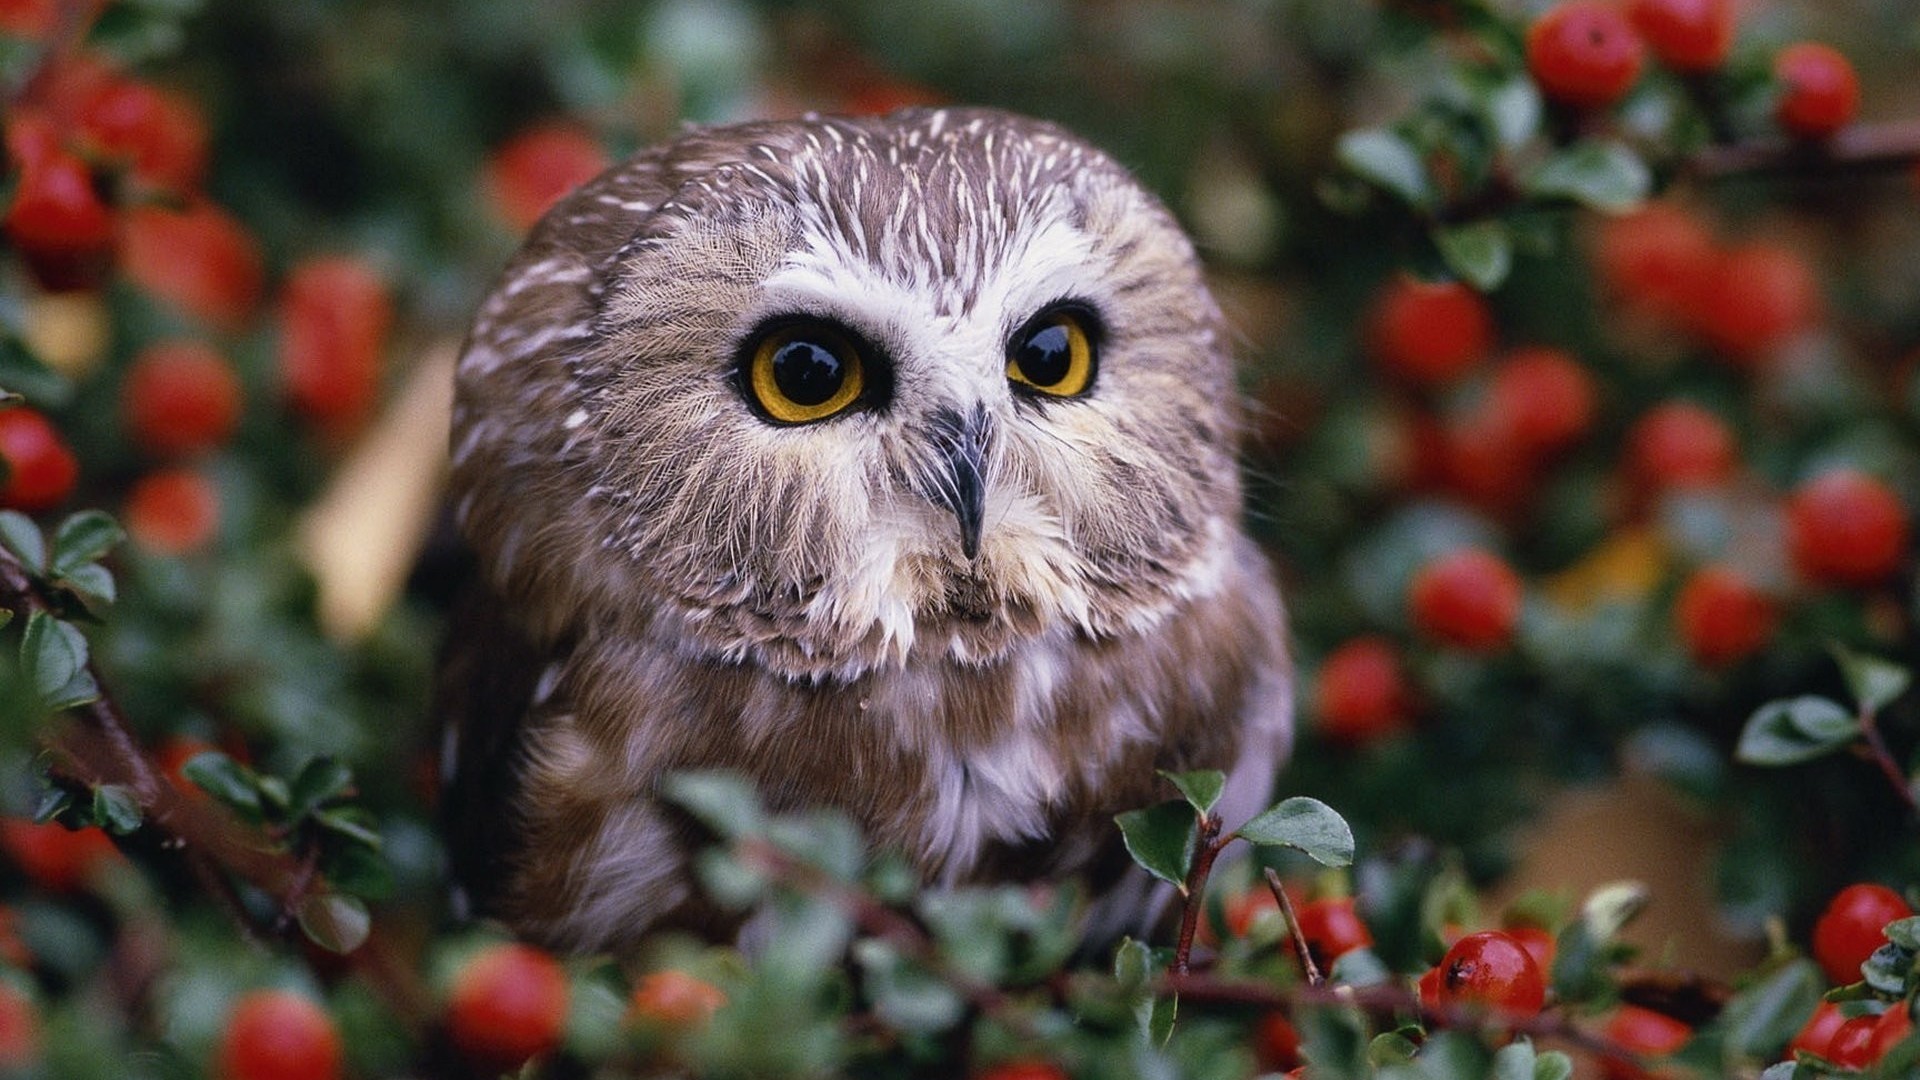 Cute owl backgrounds for desktop